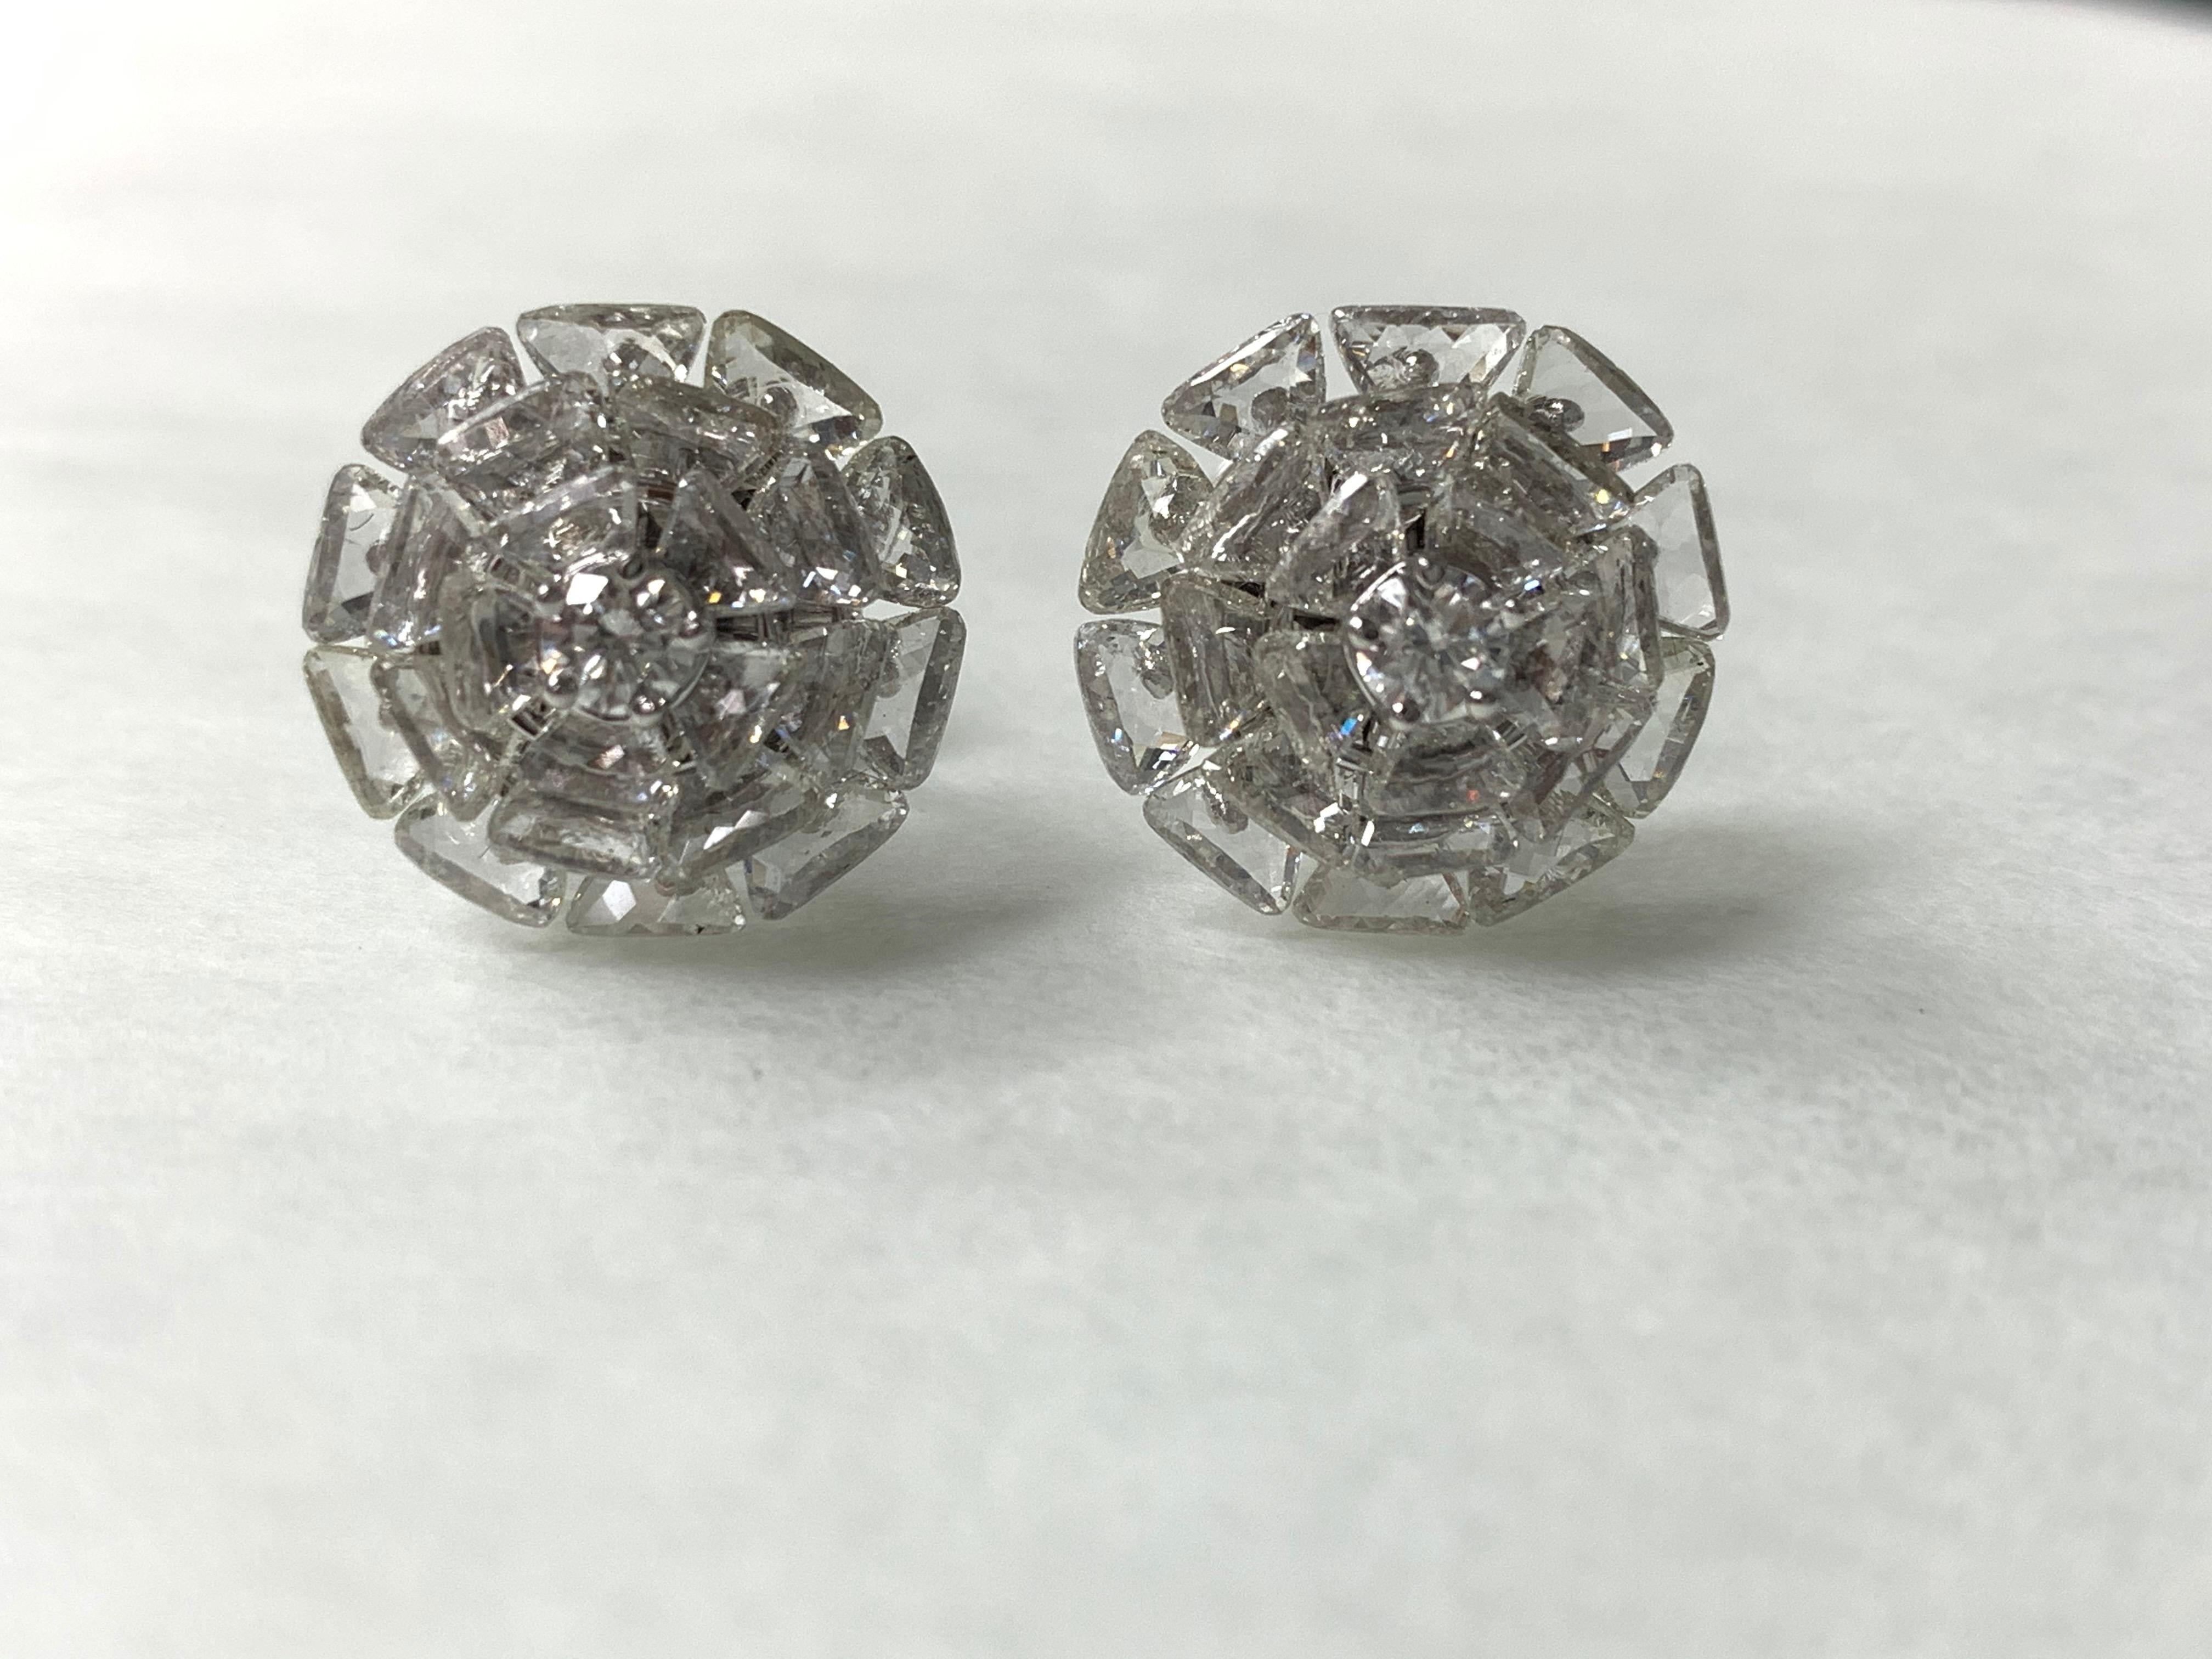 Moguldiam Inc Fancy Cut White Triangle Shape Diamond Stud Earrings In 18k White Gold. 
White Trillion Shape Diamonds : 8.77 carat ( GH color and VS Clarity ) 
Round diamonds : 0.34 carat 
Metal : 18k white gold.